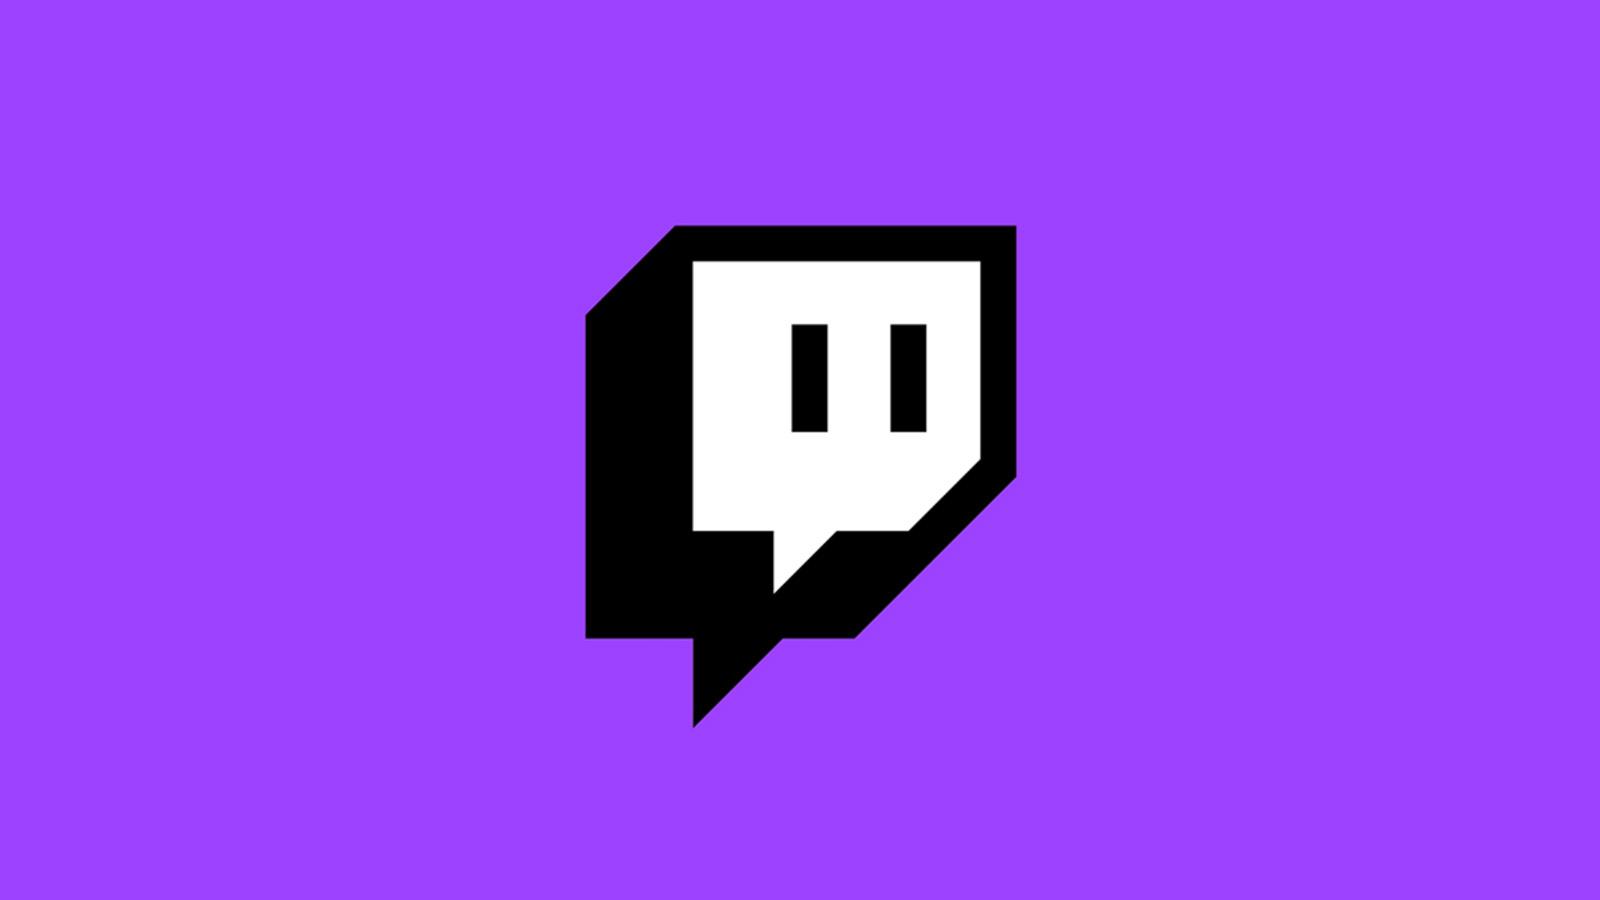 Twitch logo on purple background